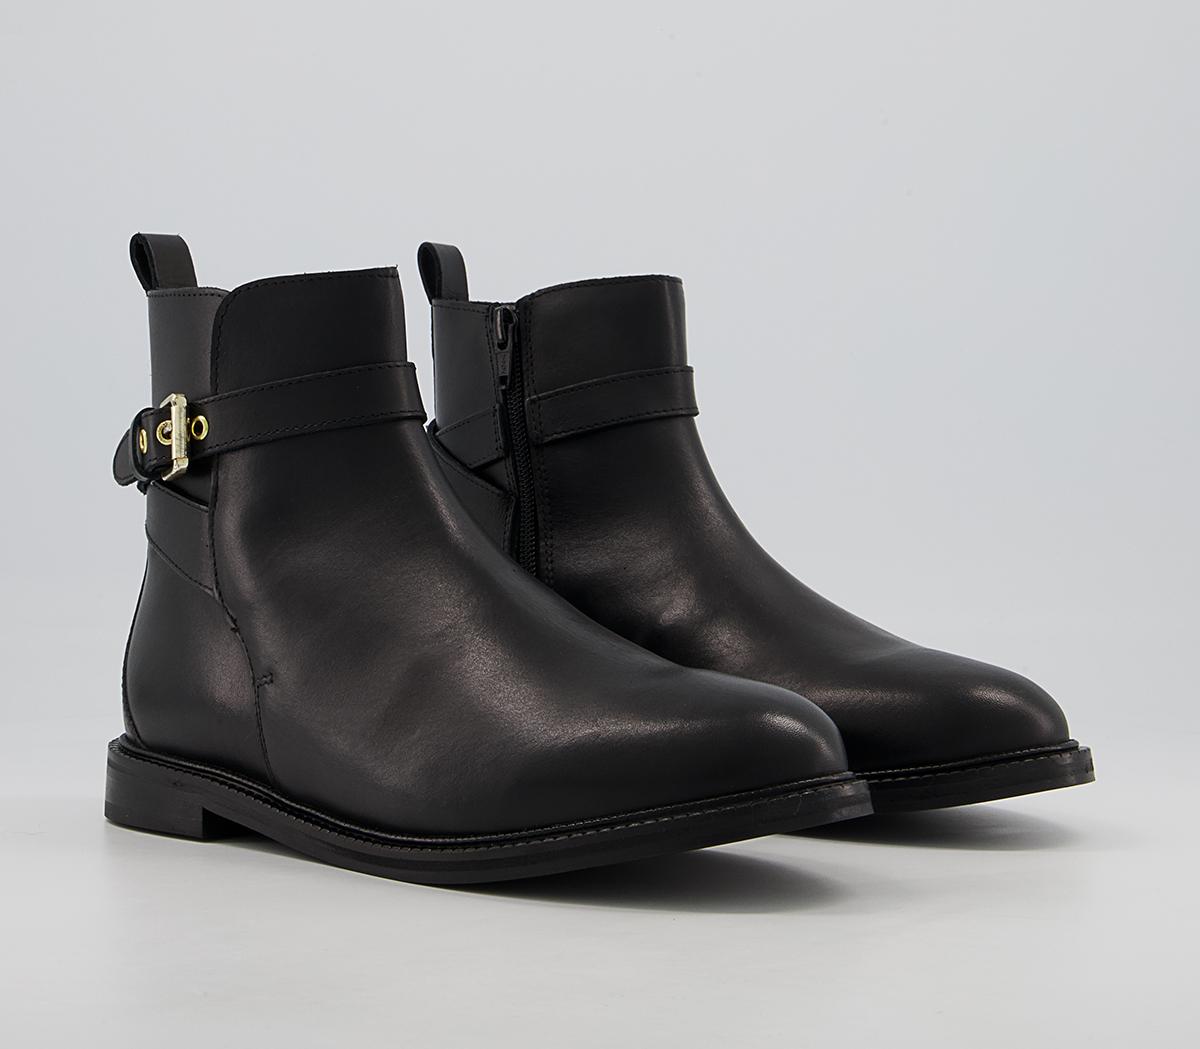 OFFICE Ashford Clean Jodphur Flat Ankle Boots Black Leather - Women's ...